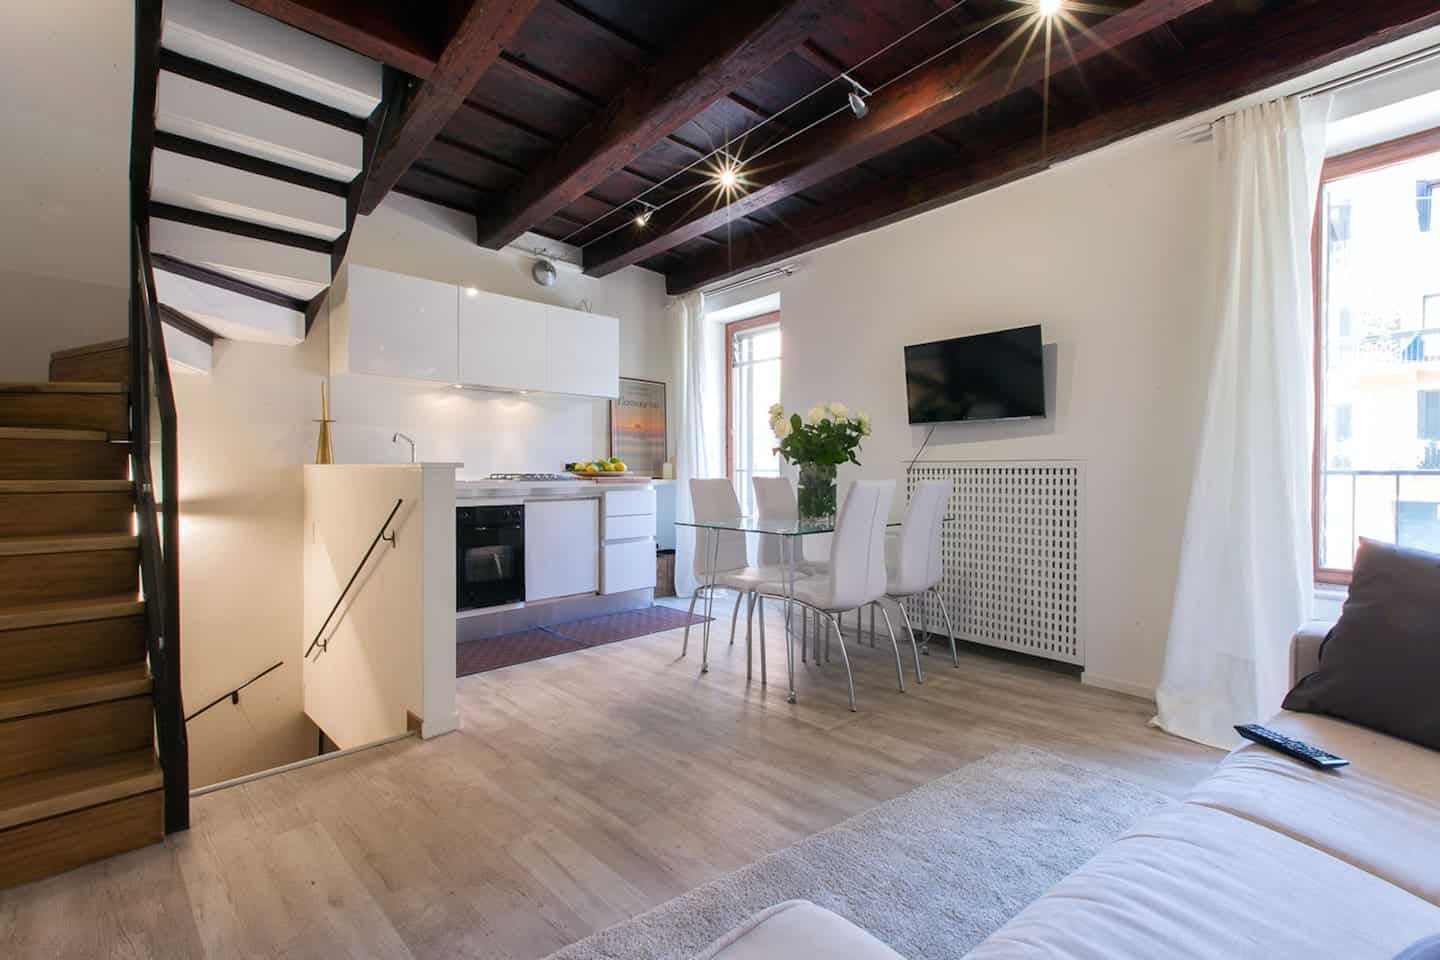 Image of Airbnb rental in Verona, Italy